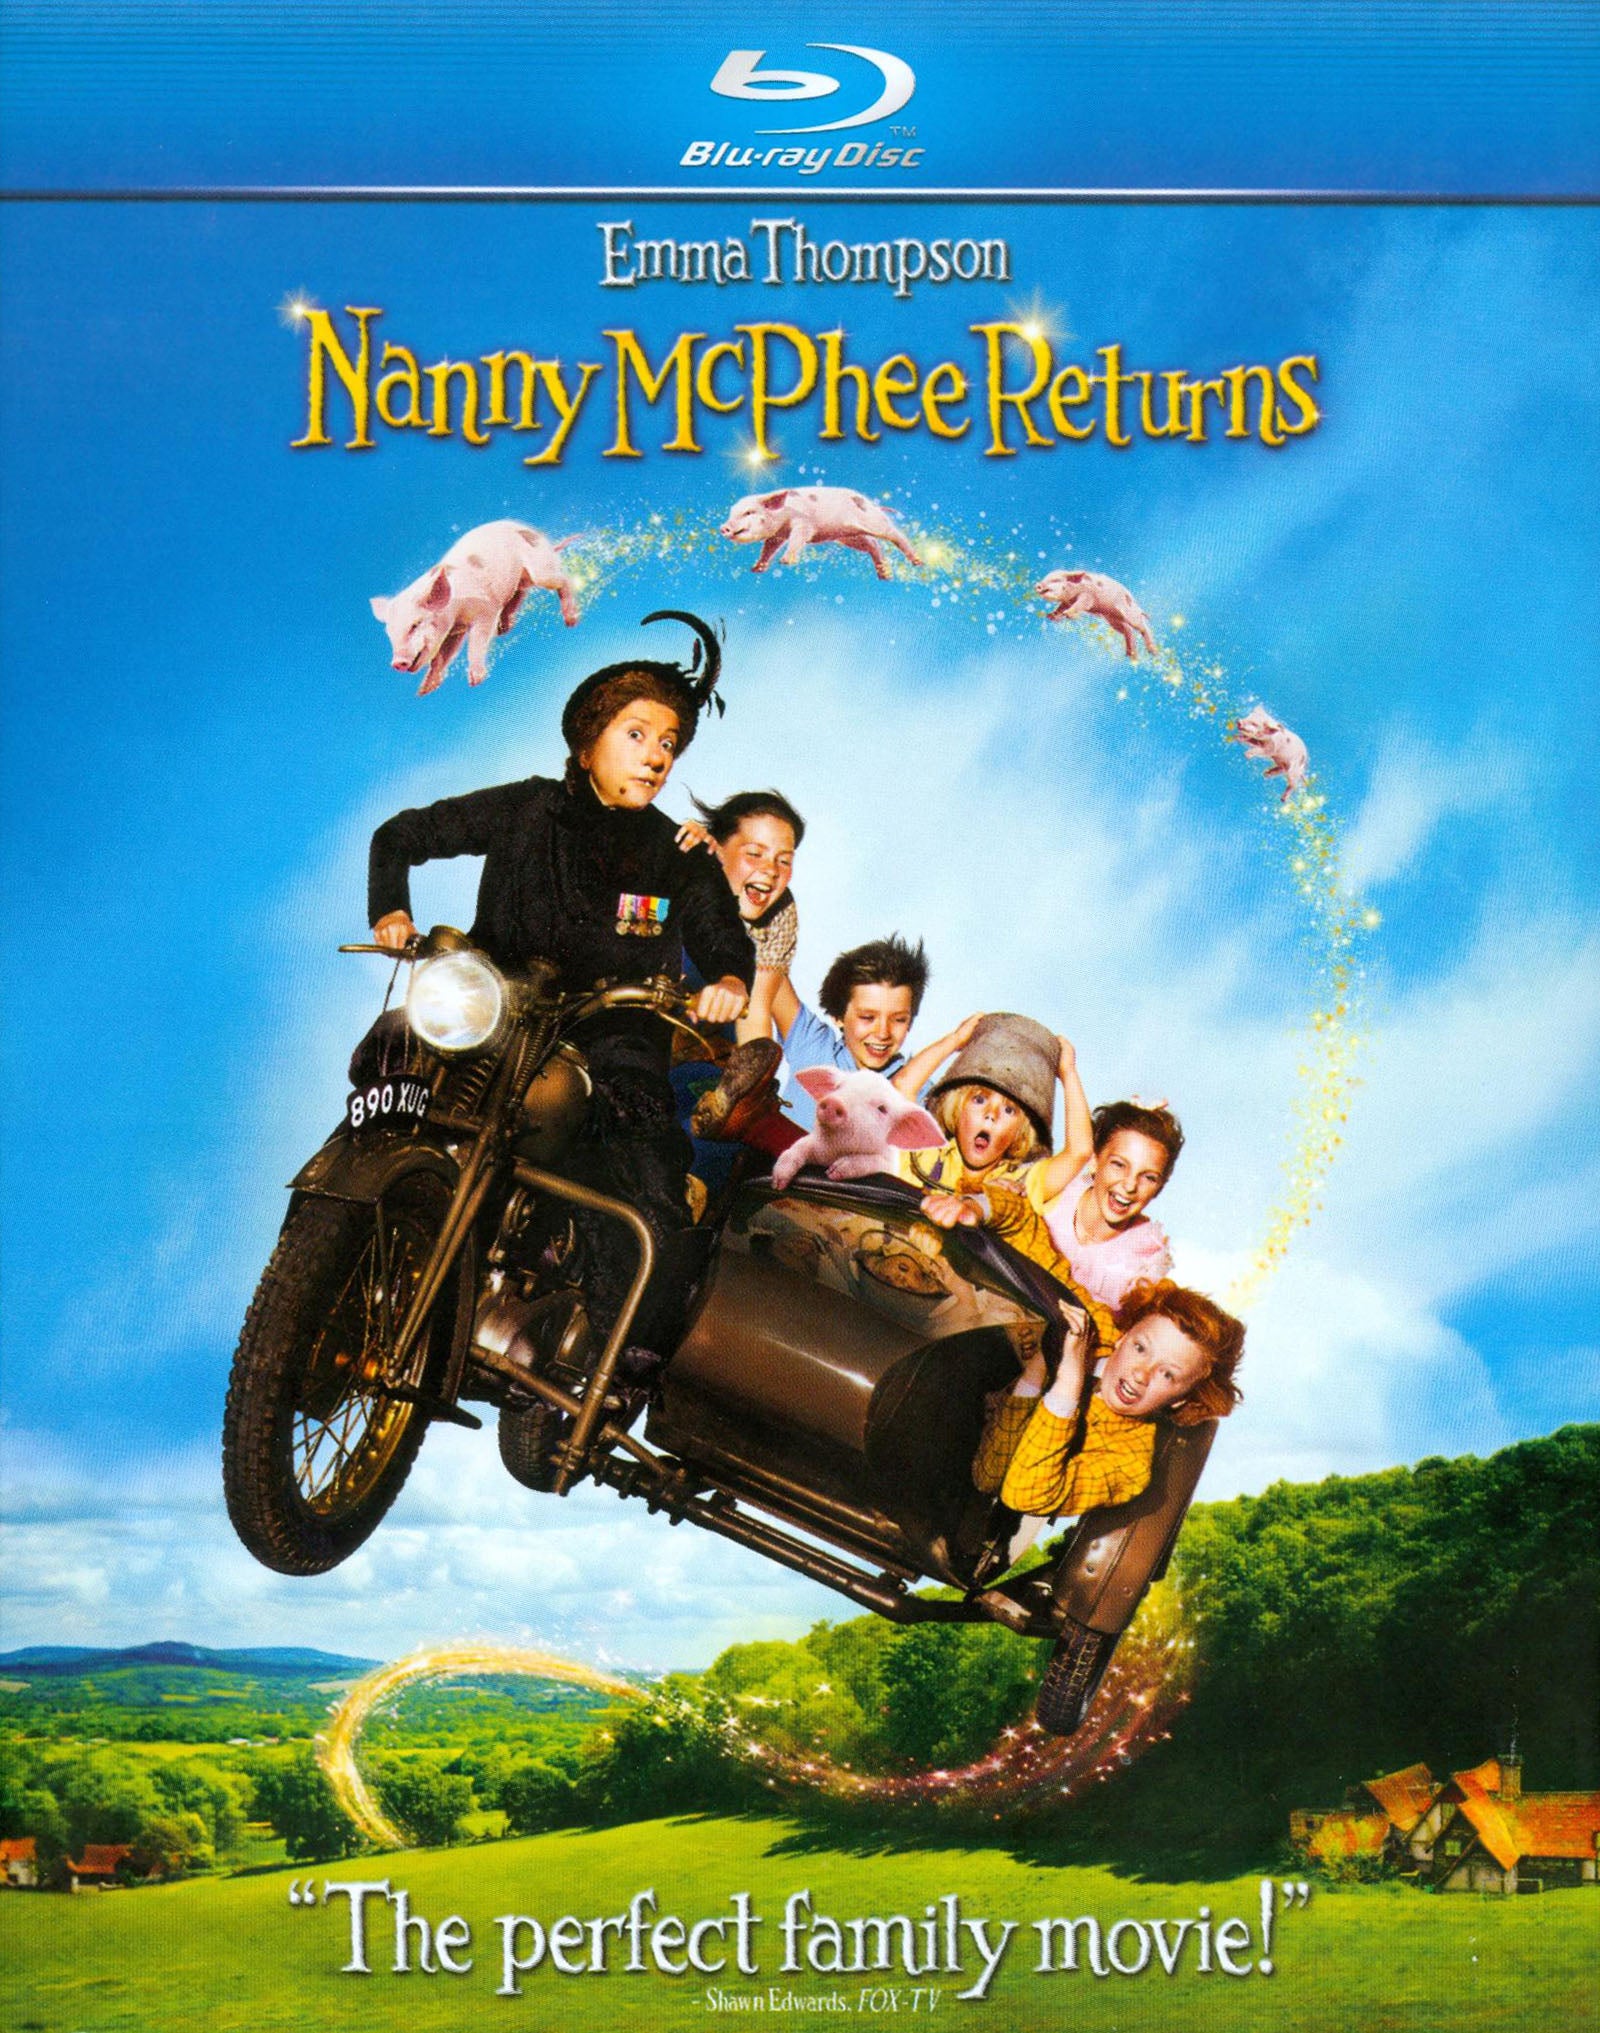 Nanny McPhee Returns [Blu-ray] cover art